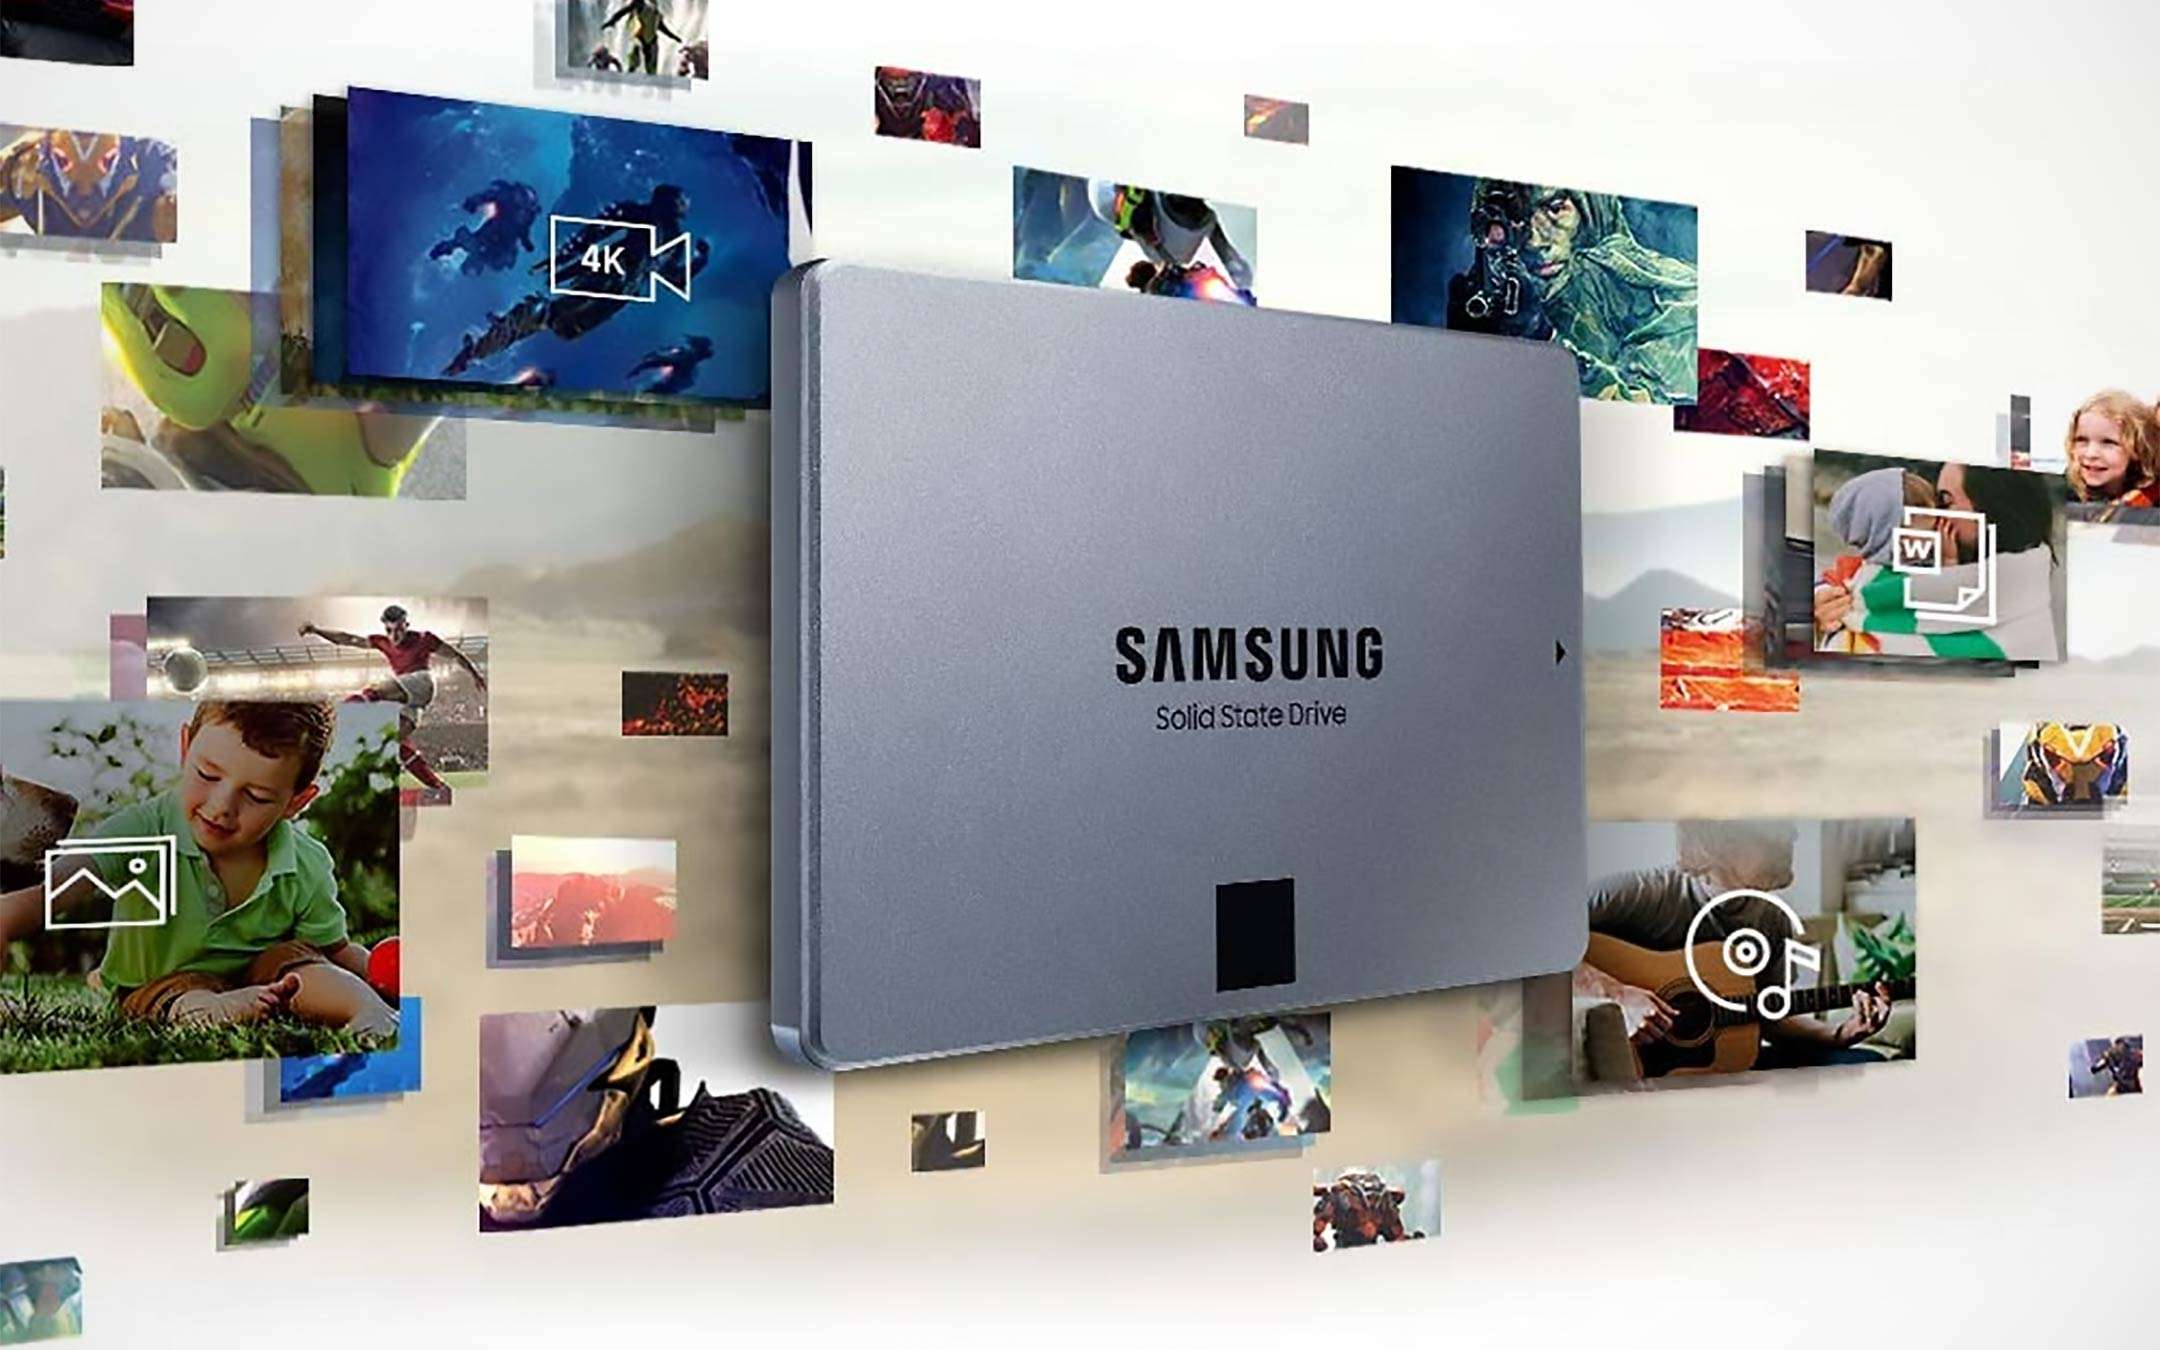 Samsung 860 QVO 1 TB SSD at -31% on Amazon